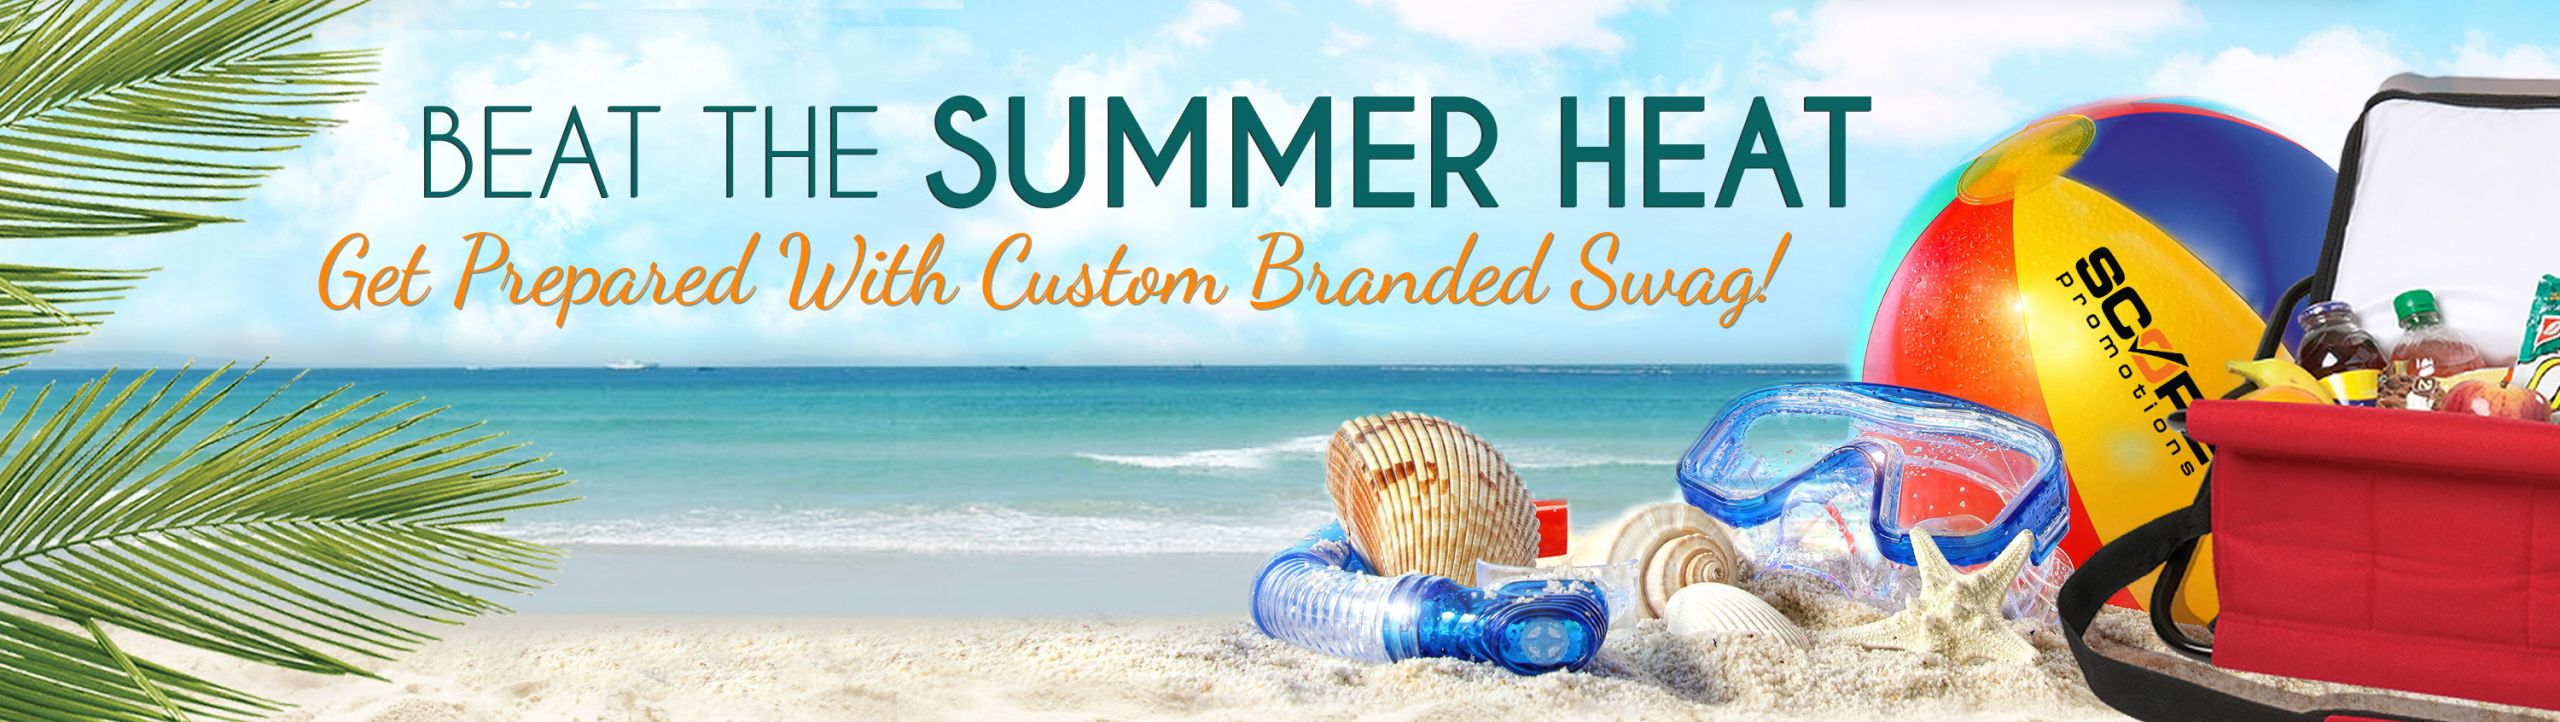 Summer Promotion Ideas
 Fresh Summer Promotional Product Ideas